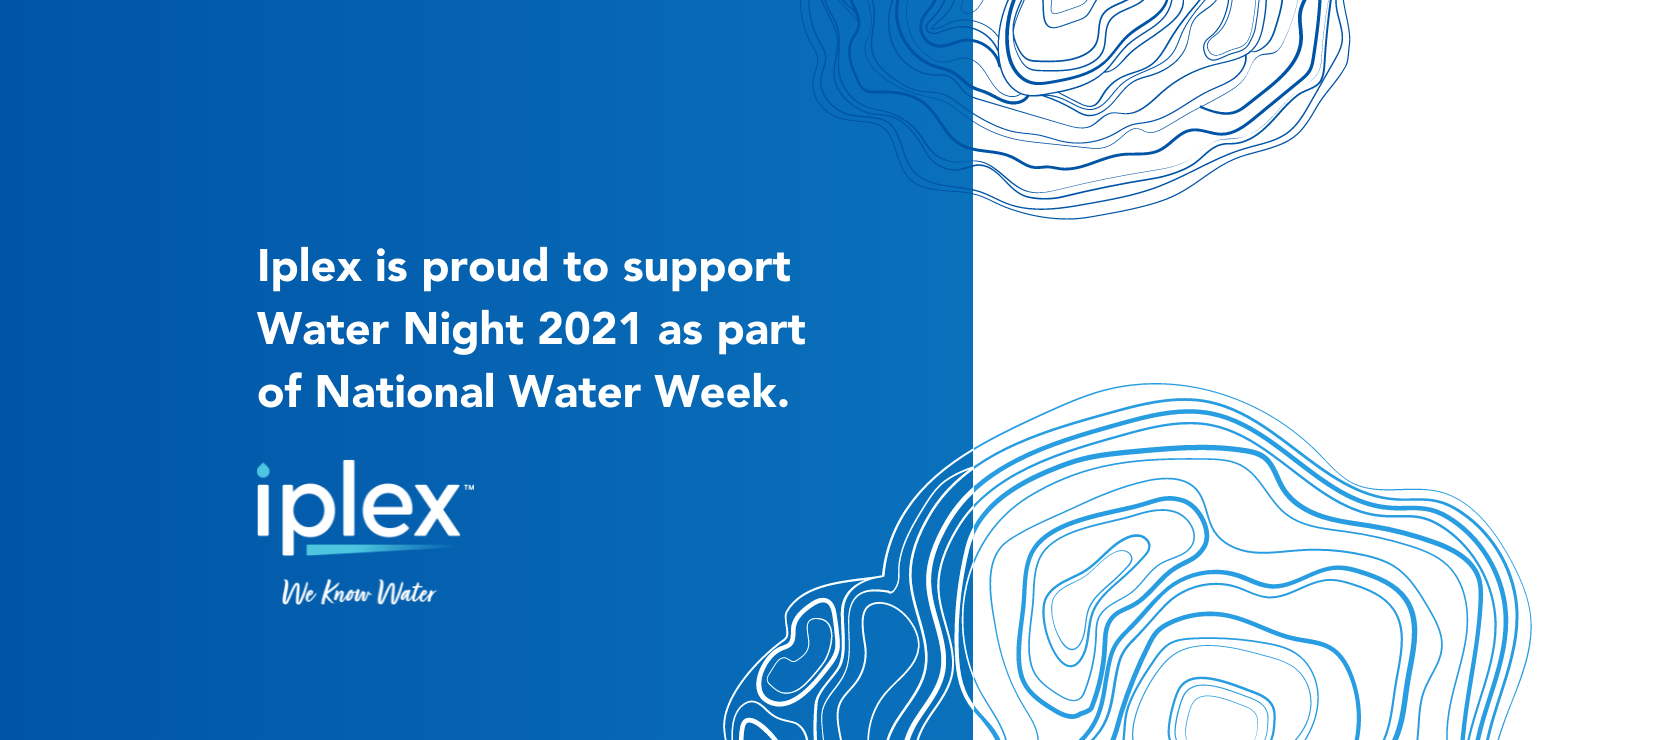 Iplex is the official sponsor of Waternight 2021 | National Water Week